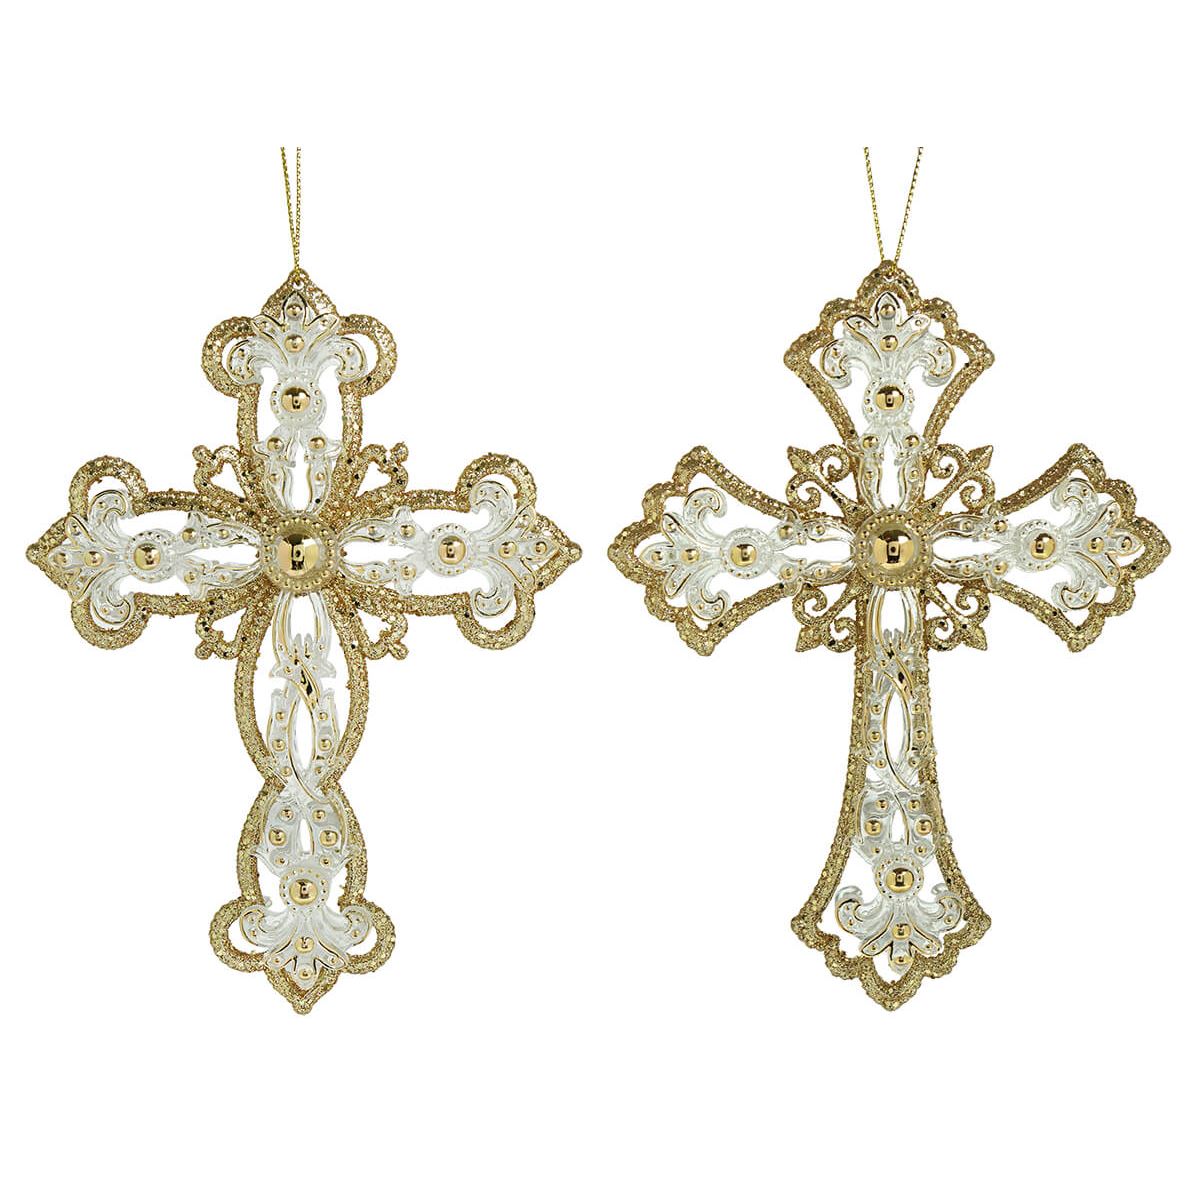 Gold & Silver Cross Ornaments Set/2